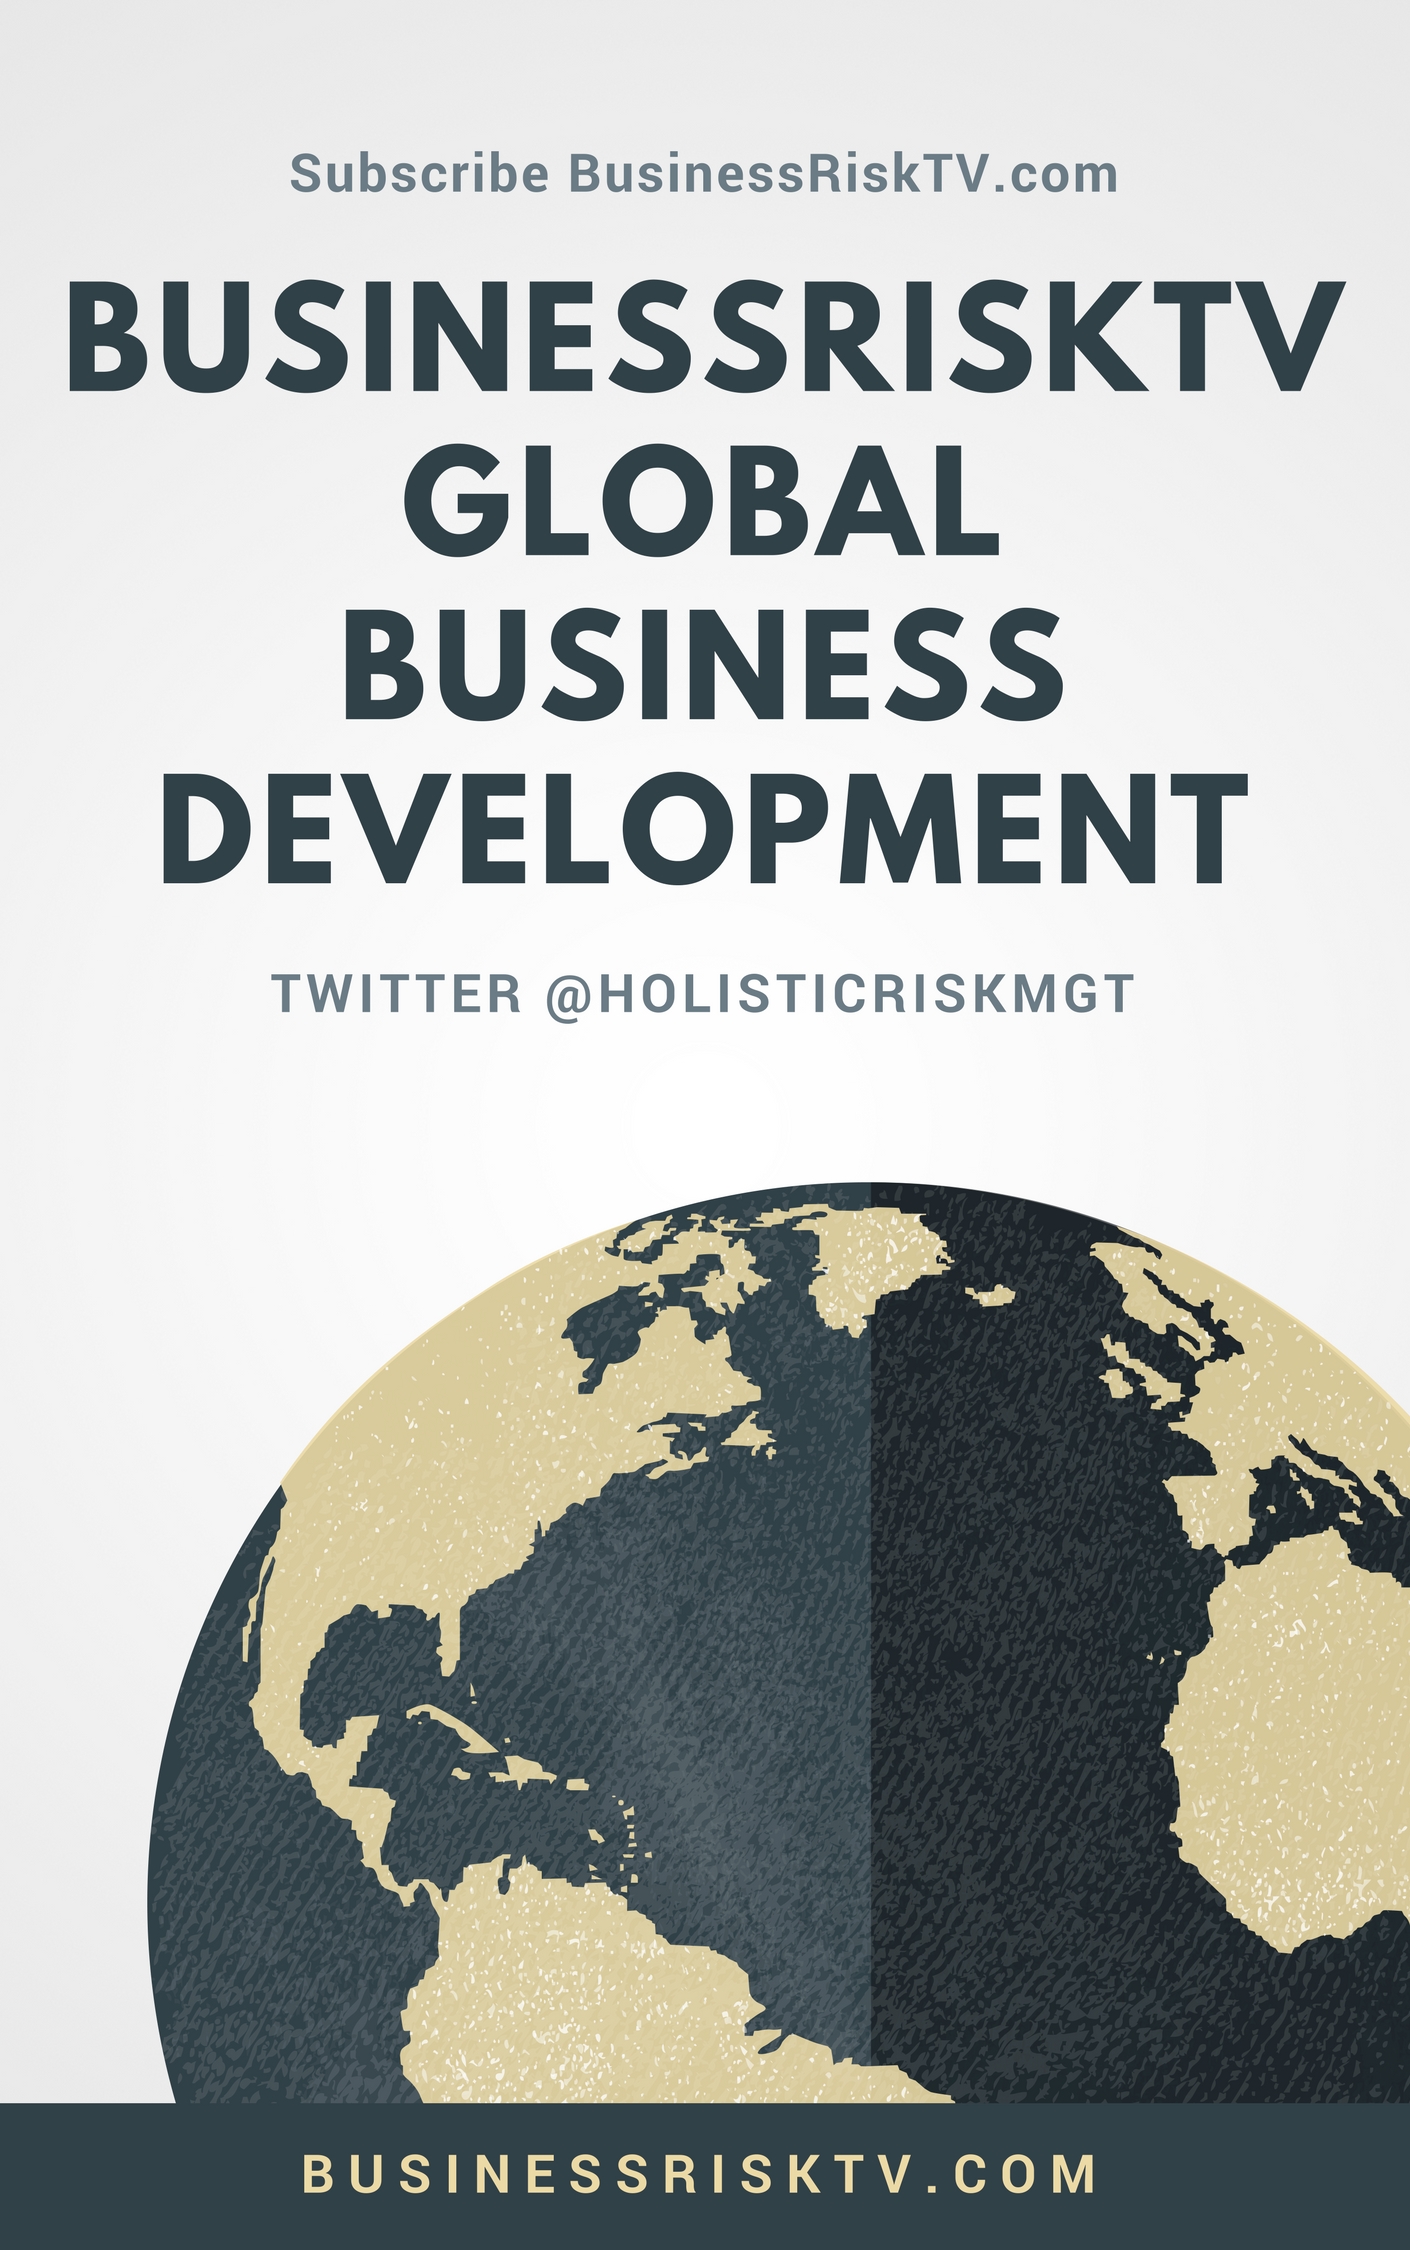 Global Business Development With BusinessRiskTV.com